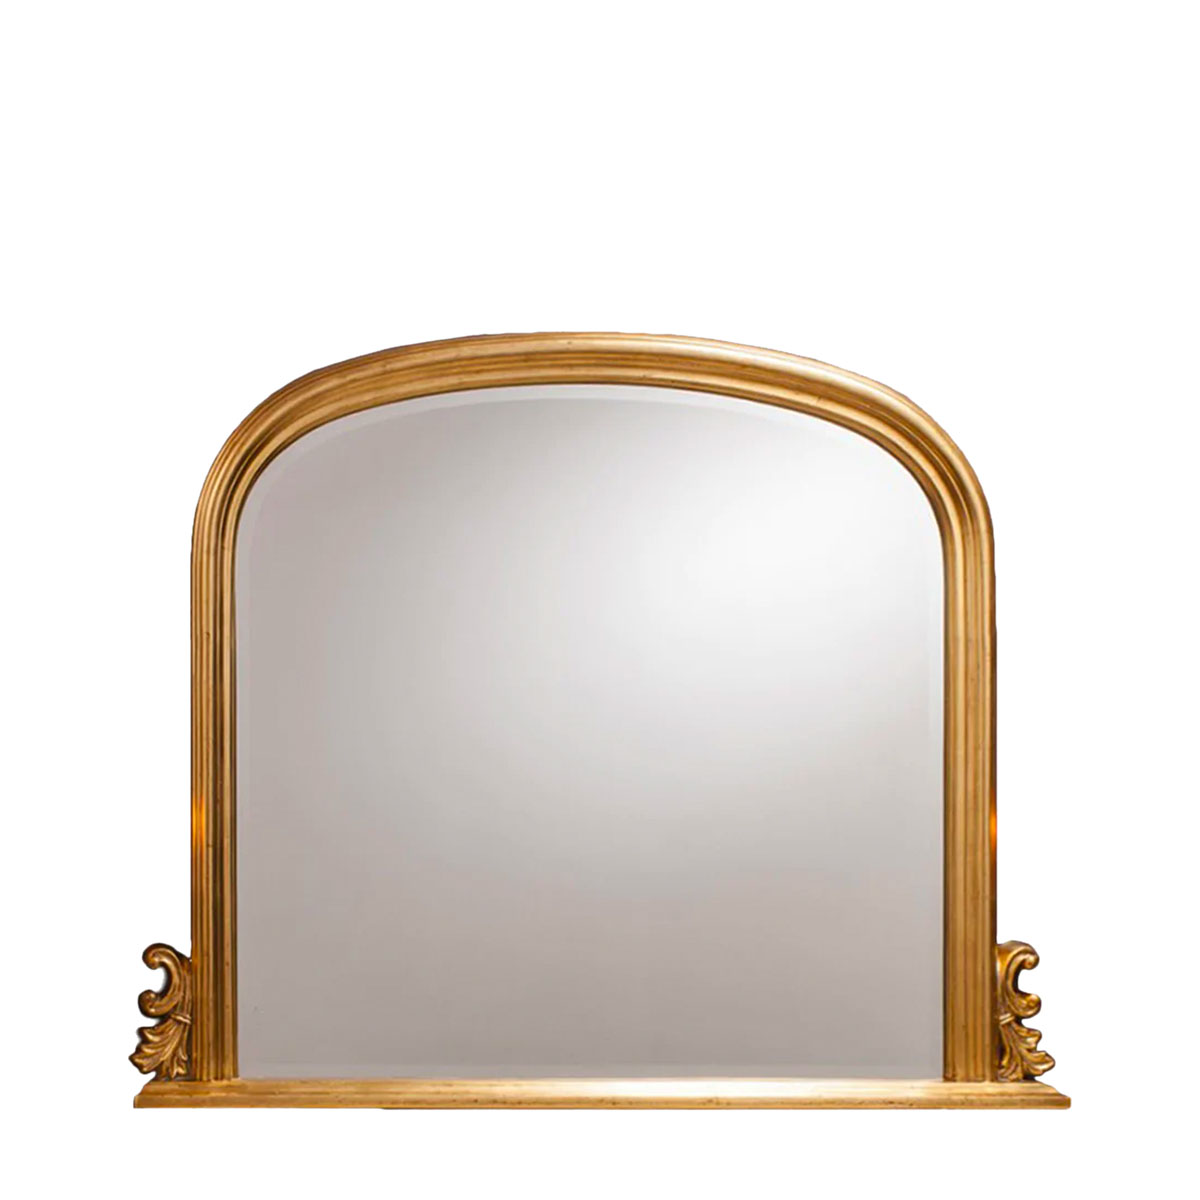 Thornby Mirror Gold 1180x940mm